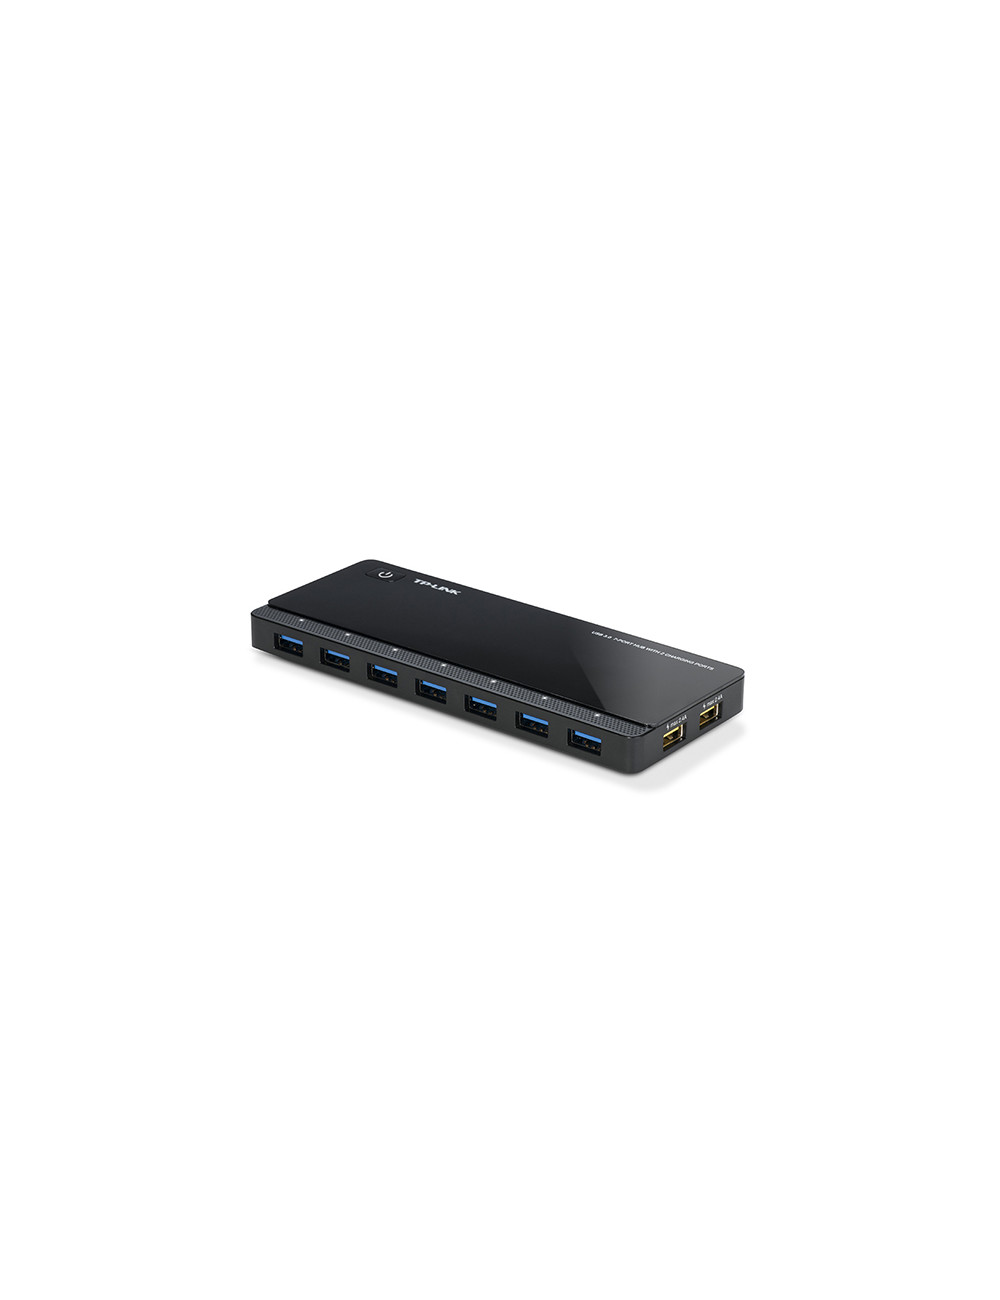 TP-LINK UH720 USB 3.0 7-Port Hub with 2 Charging Ports